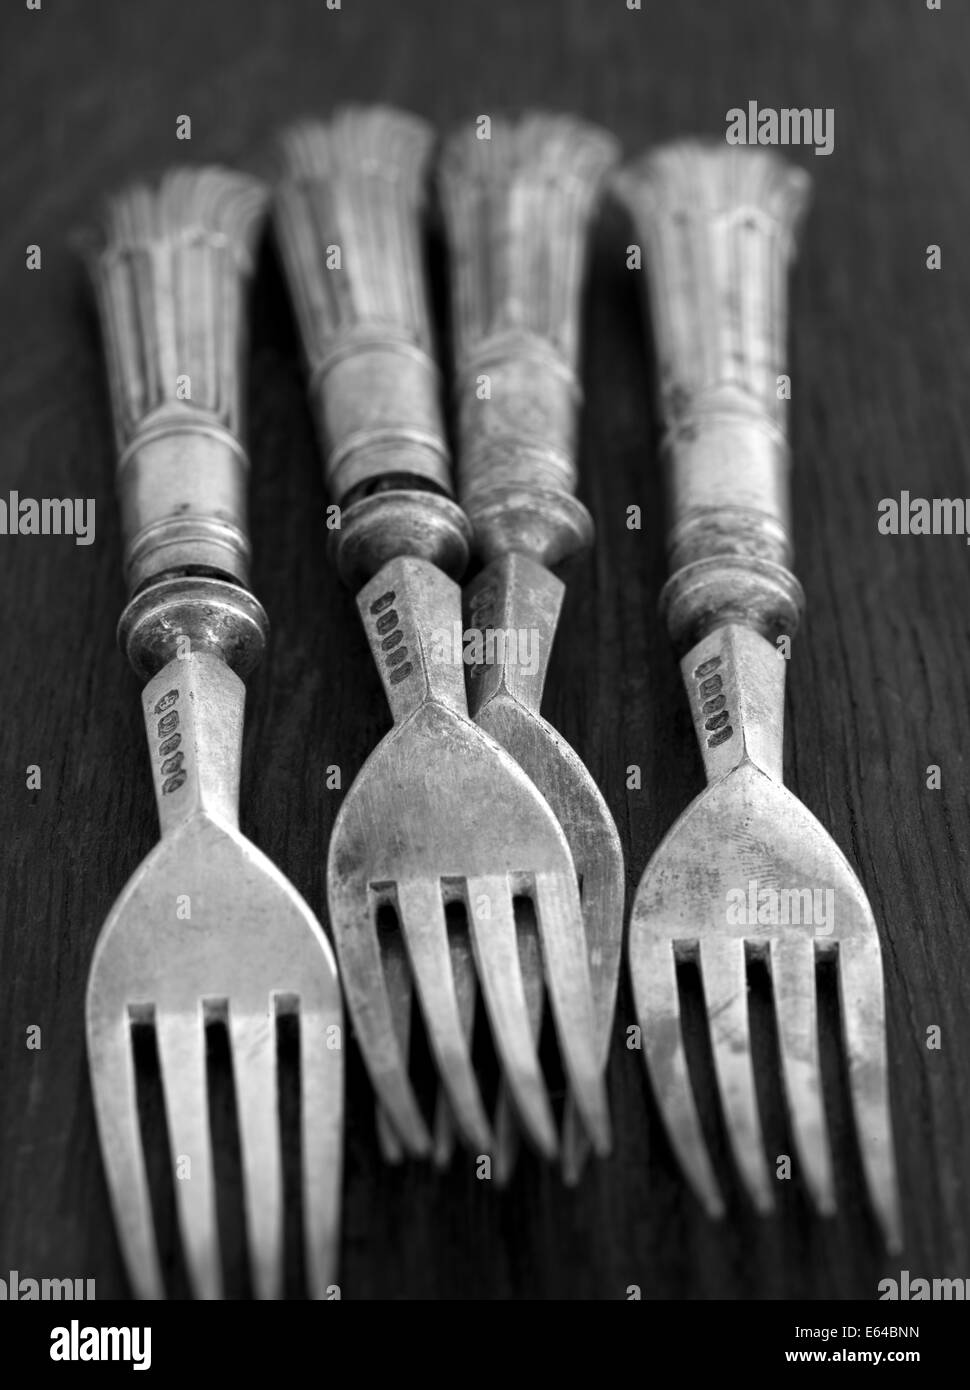 Old Vintage Table Forks on a dark background Stock Photo